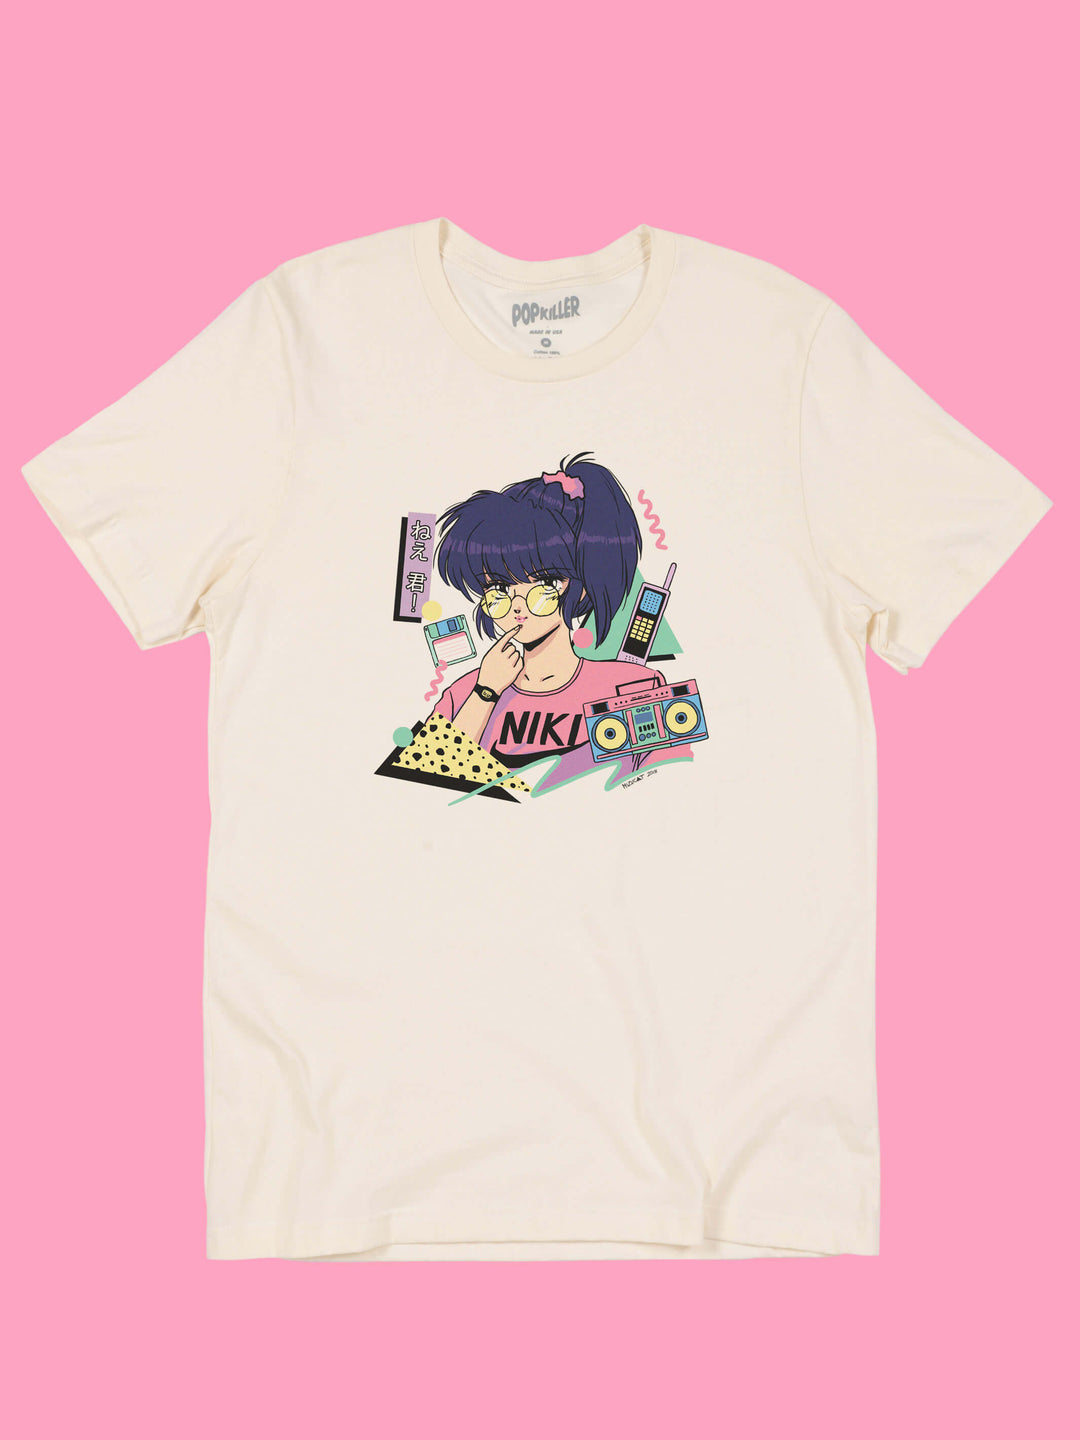 Cream graphic T-shirt with vaporwave anime girl by artist Mizucat.